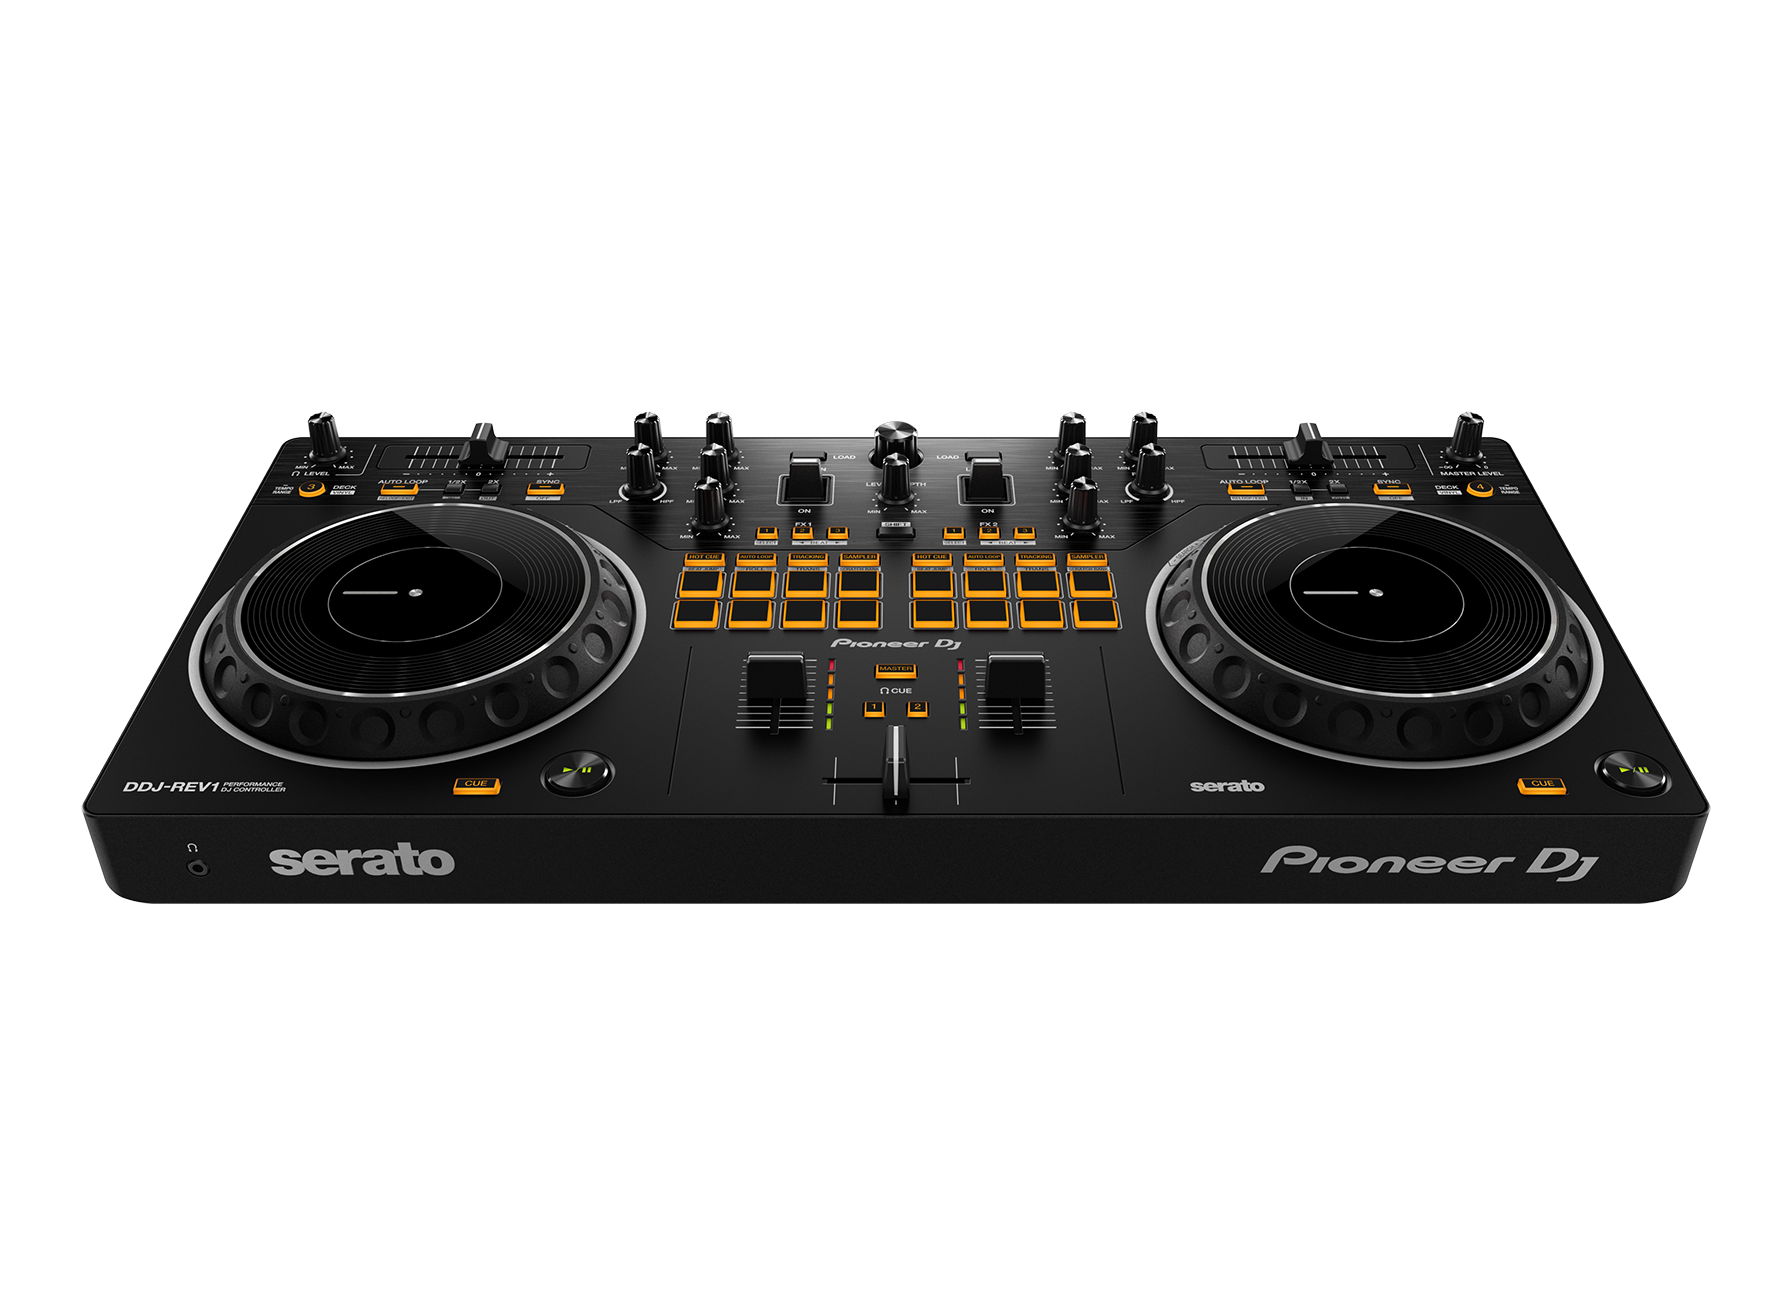 Pioneer DJ(パイオニア) DDJ-REV7 Serato DJ Pro対応 スクラッチスタイル 2ch プロフェッショナル DJコントローラー  (Black)新生活応援 DJコントローラー